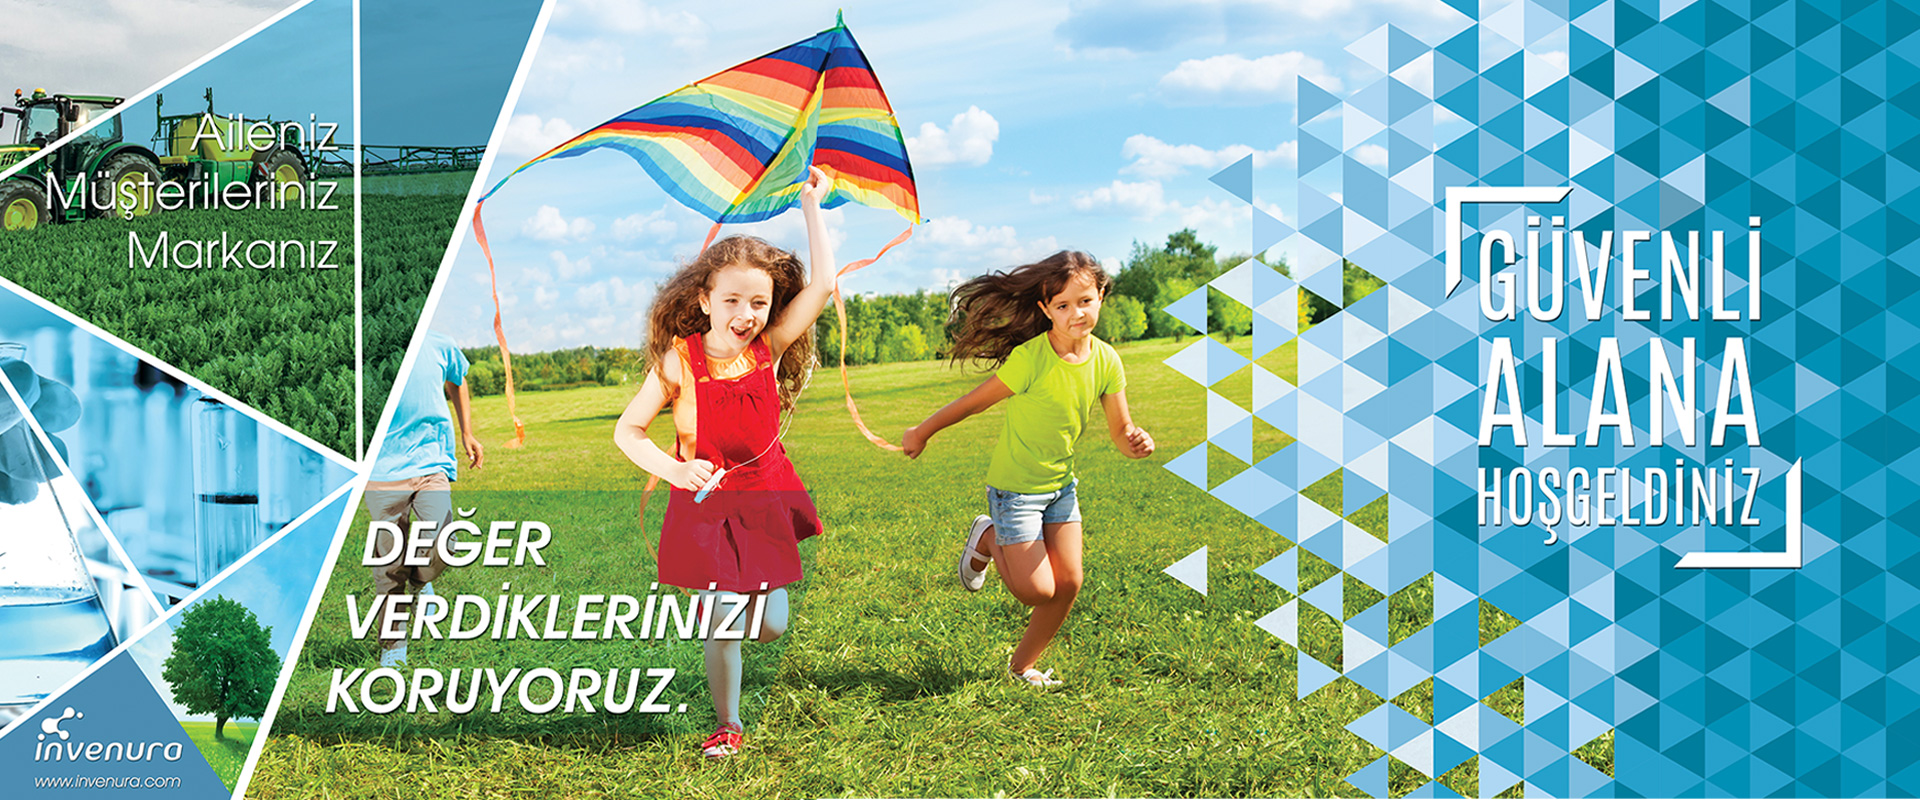 Invenura Laboratories - KONSEPTIZ Advertising Agency in Turkey